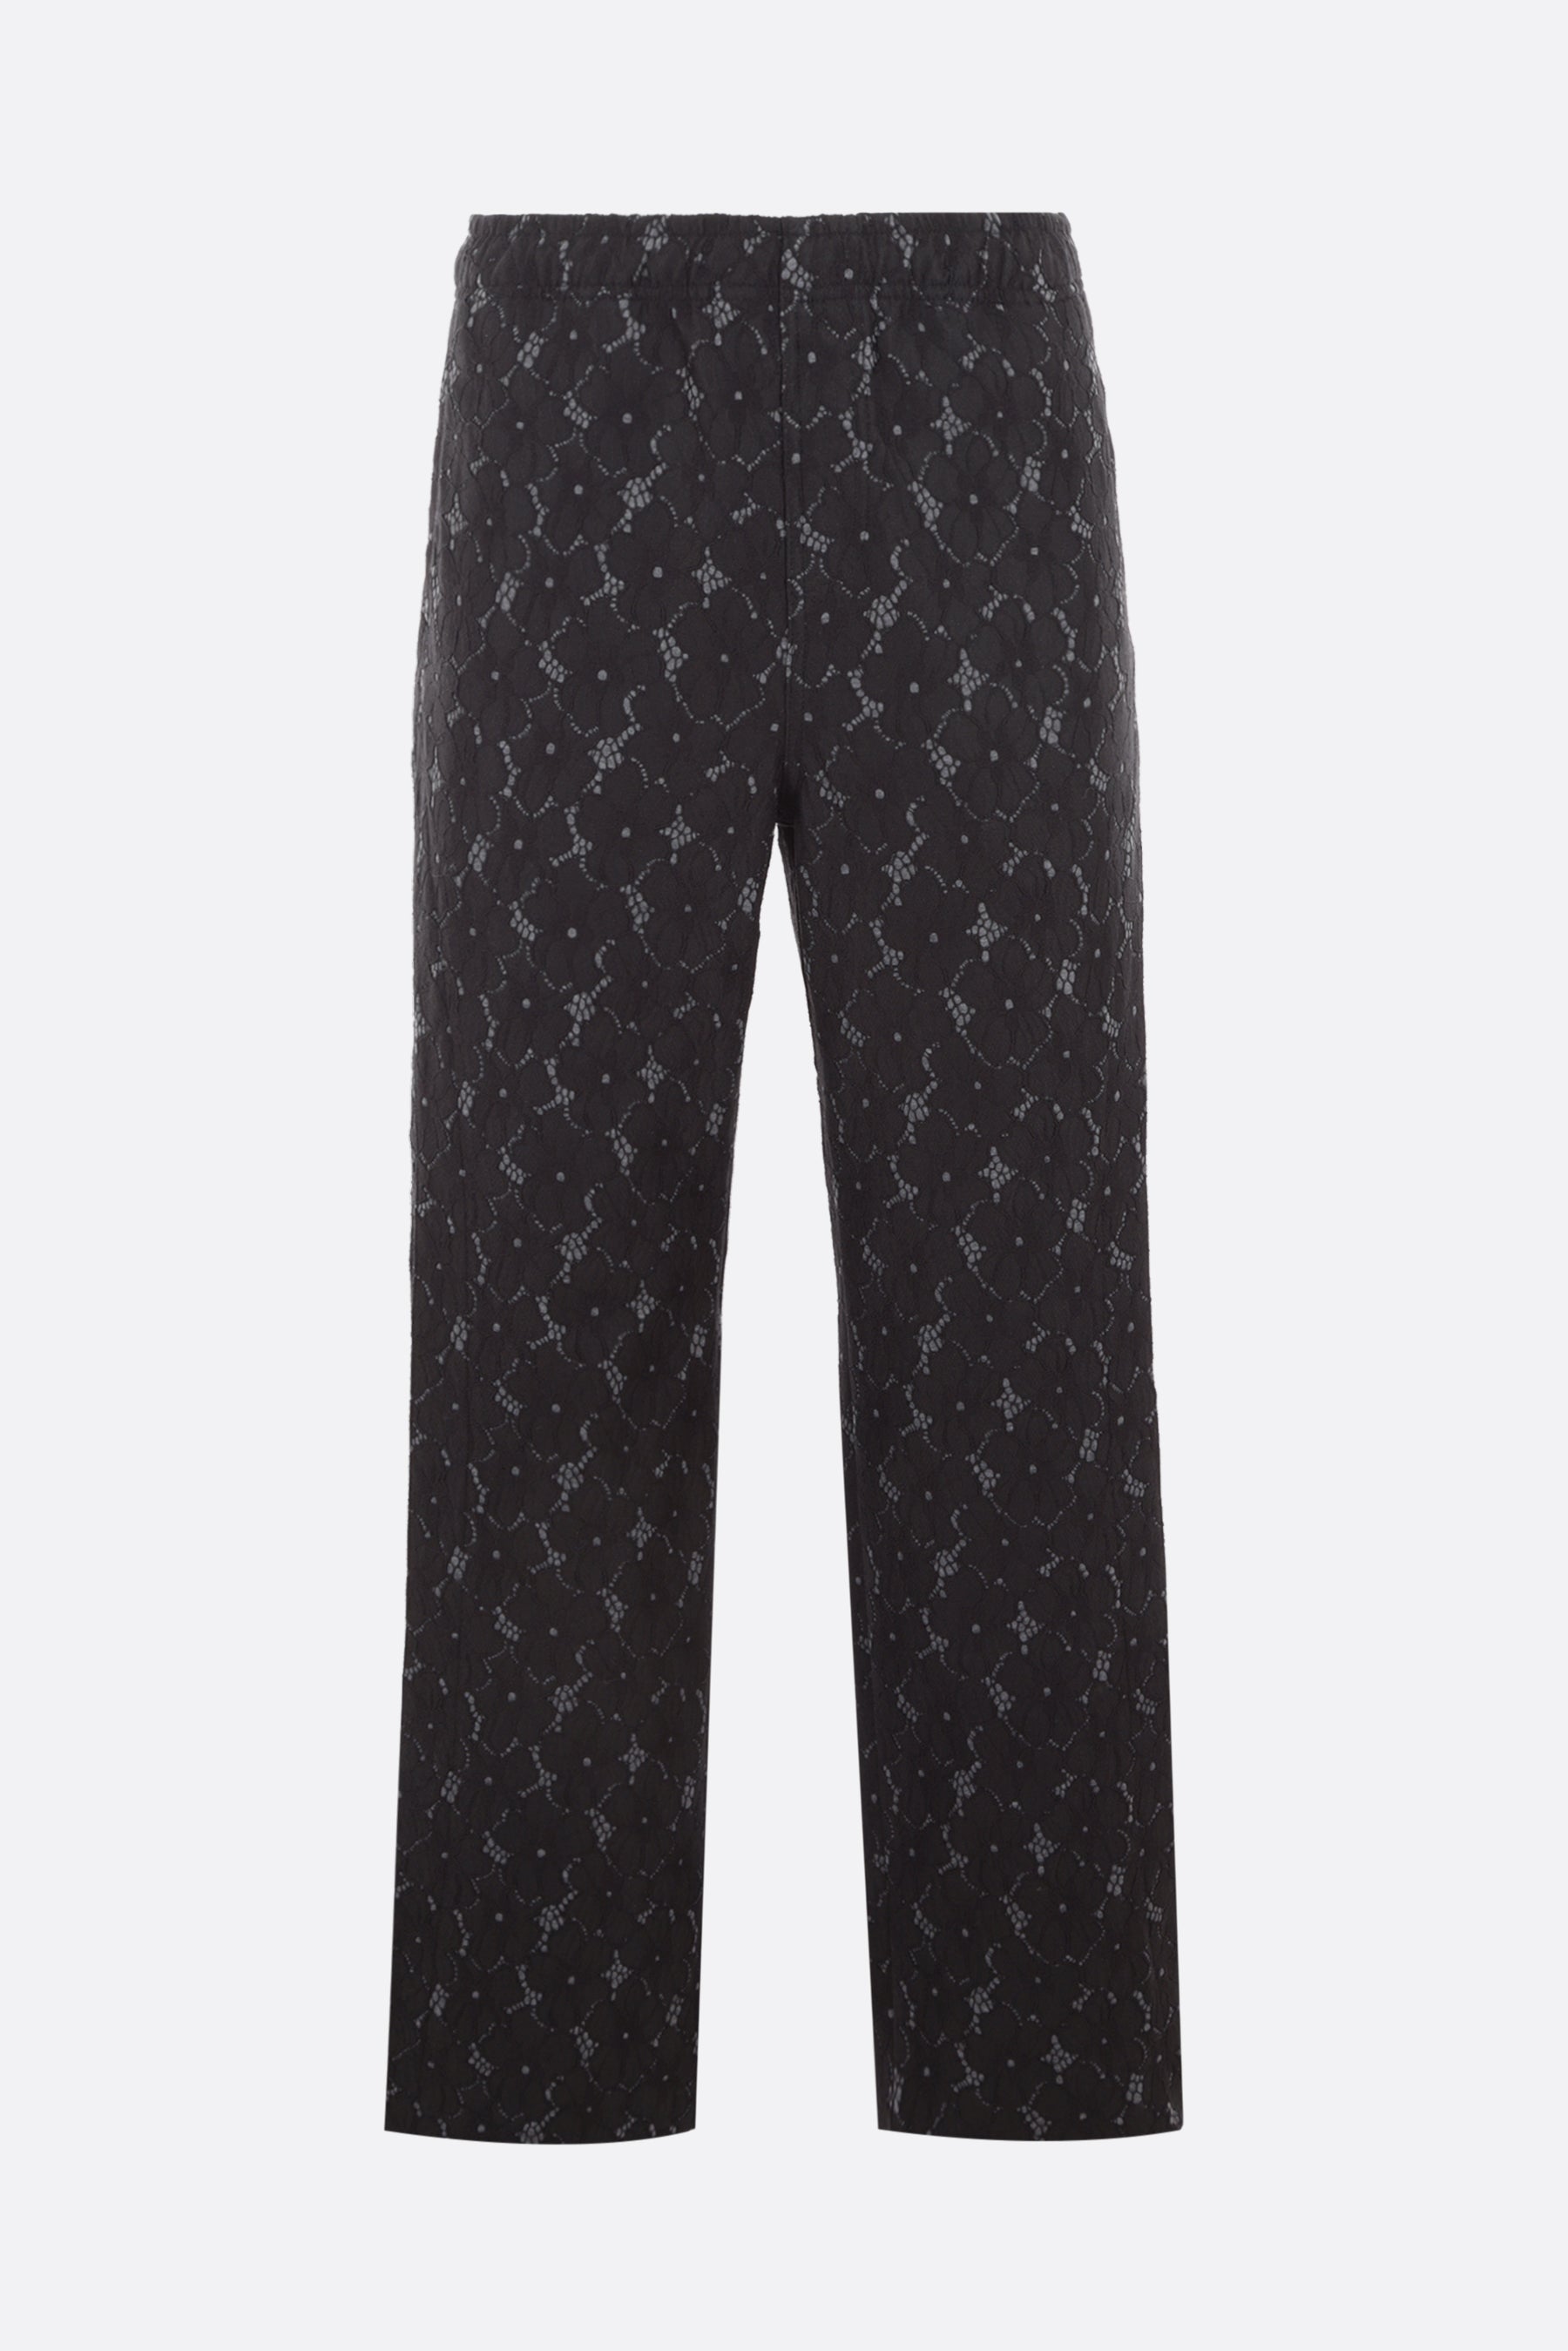 Louis Vuitton Monogram Pants, Black, 44